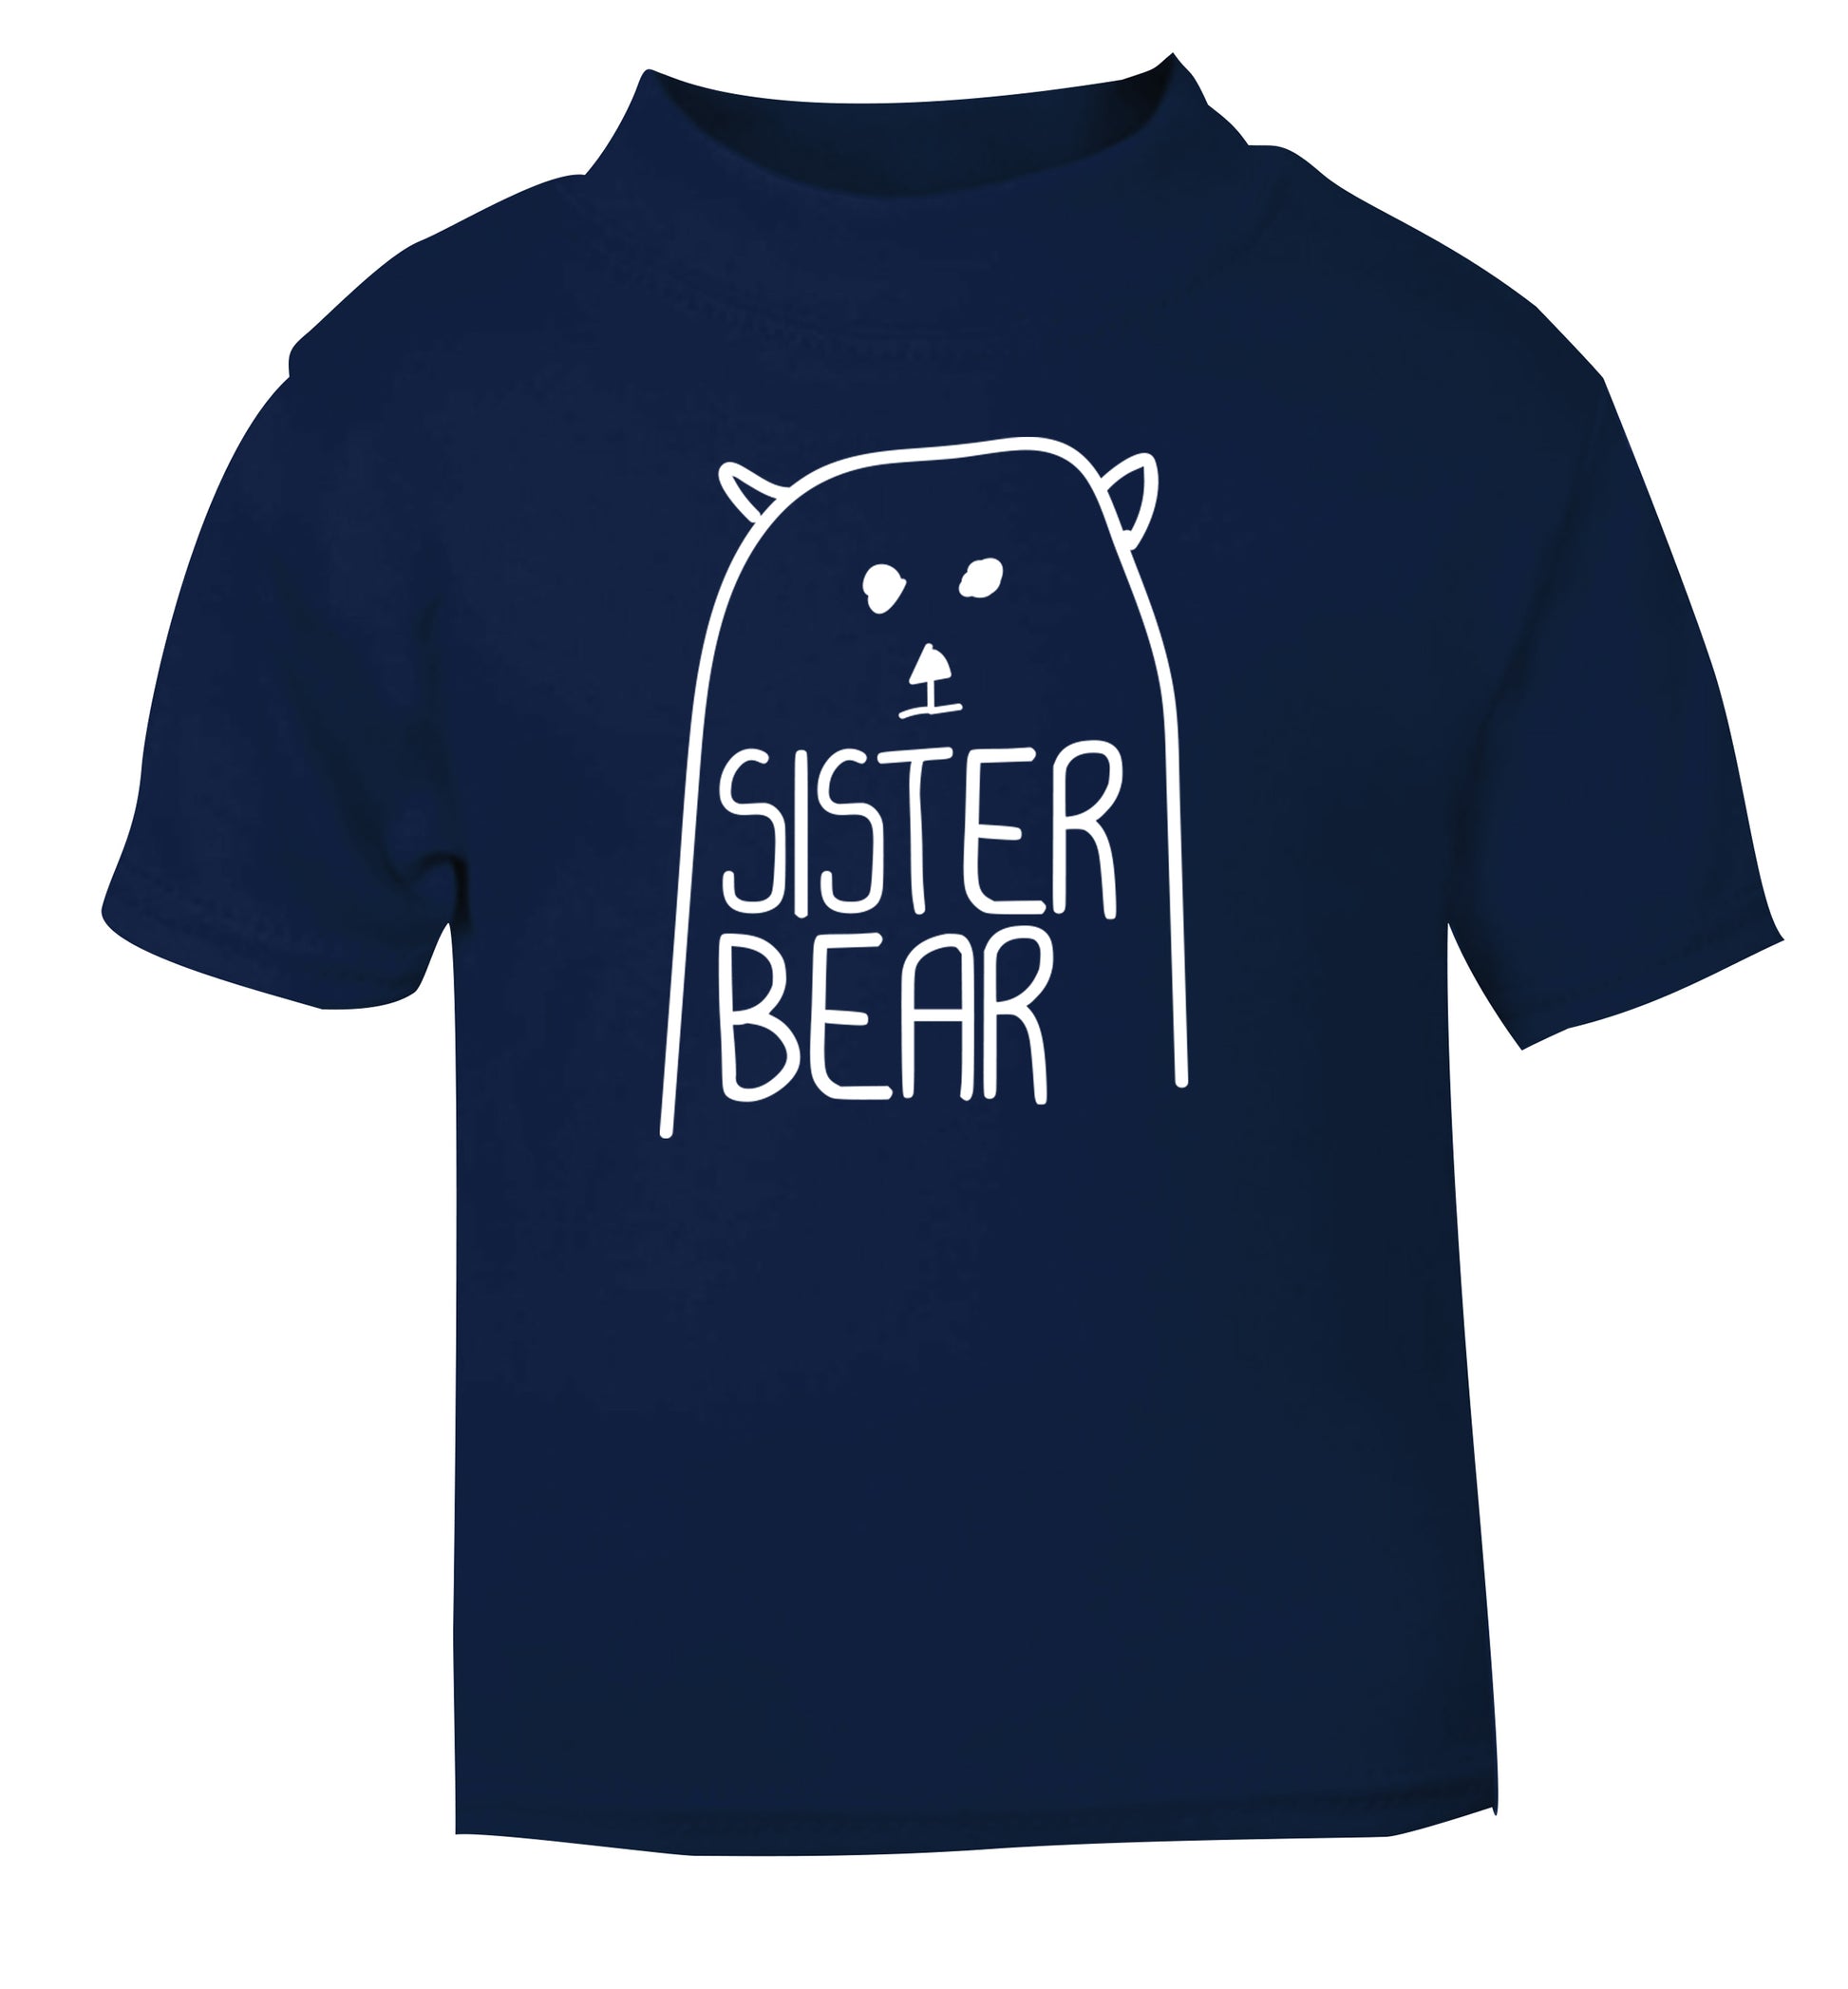 Sister bear navy Baby Toddler Tshirt 2 Years